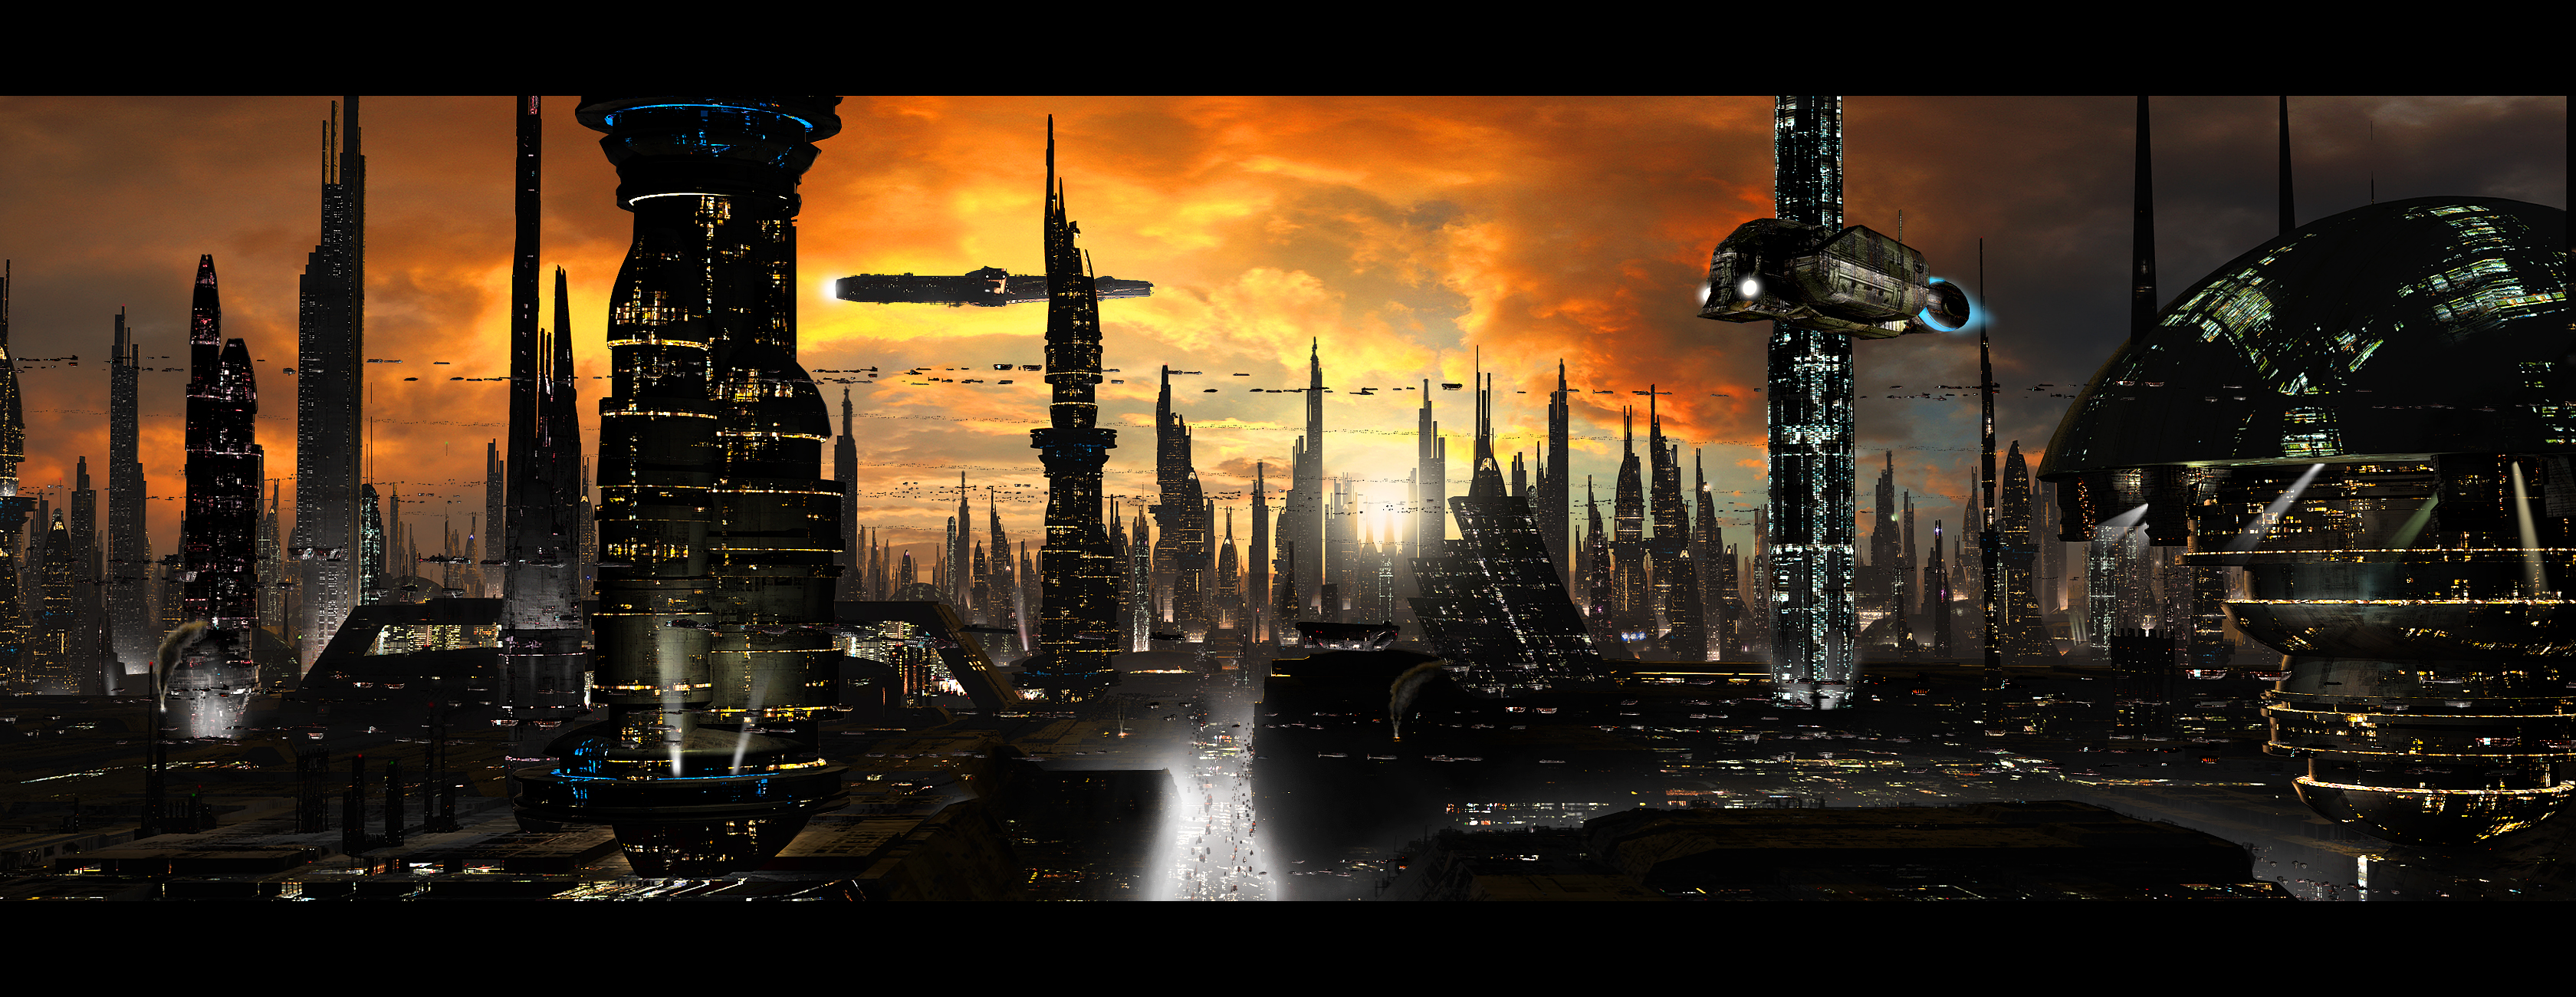 "Futuristic City" by Scott Richard